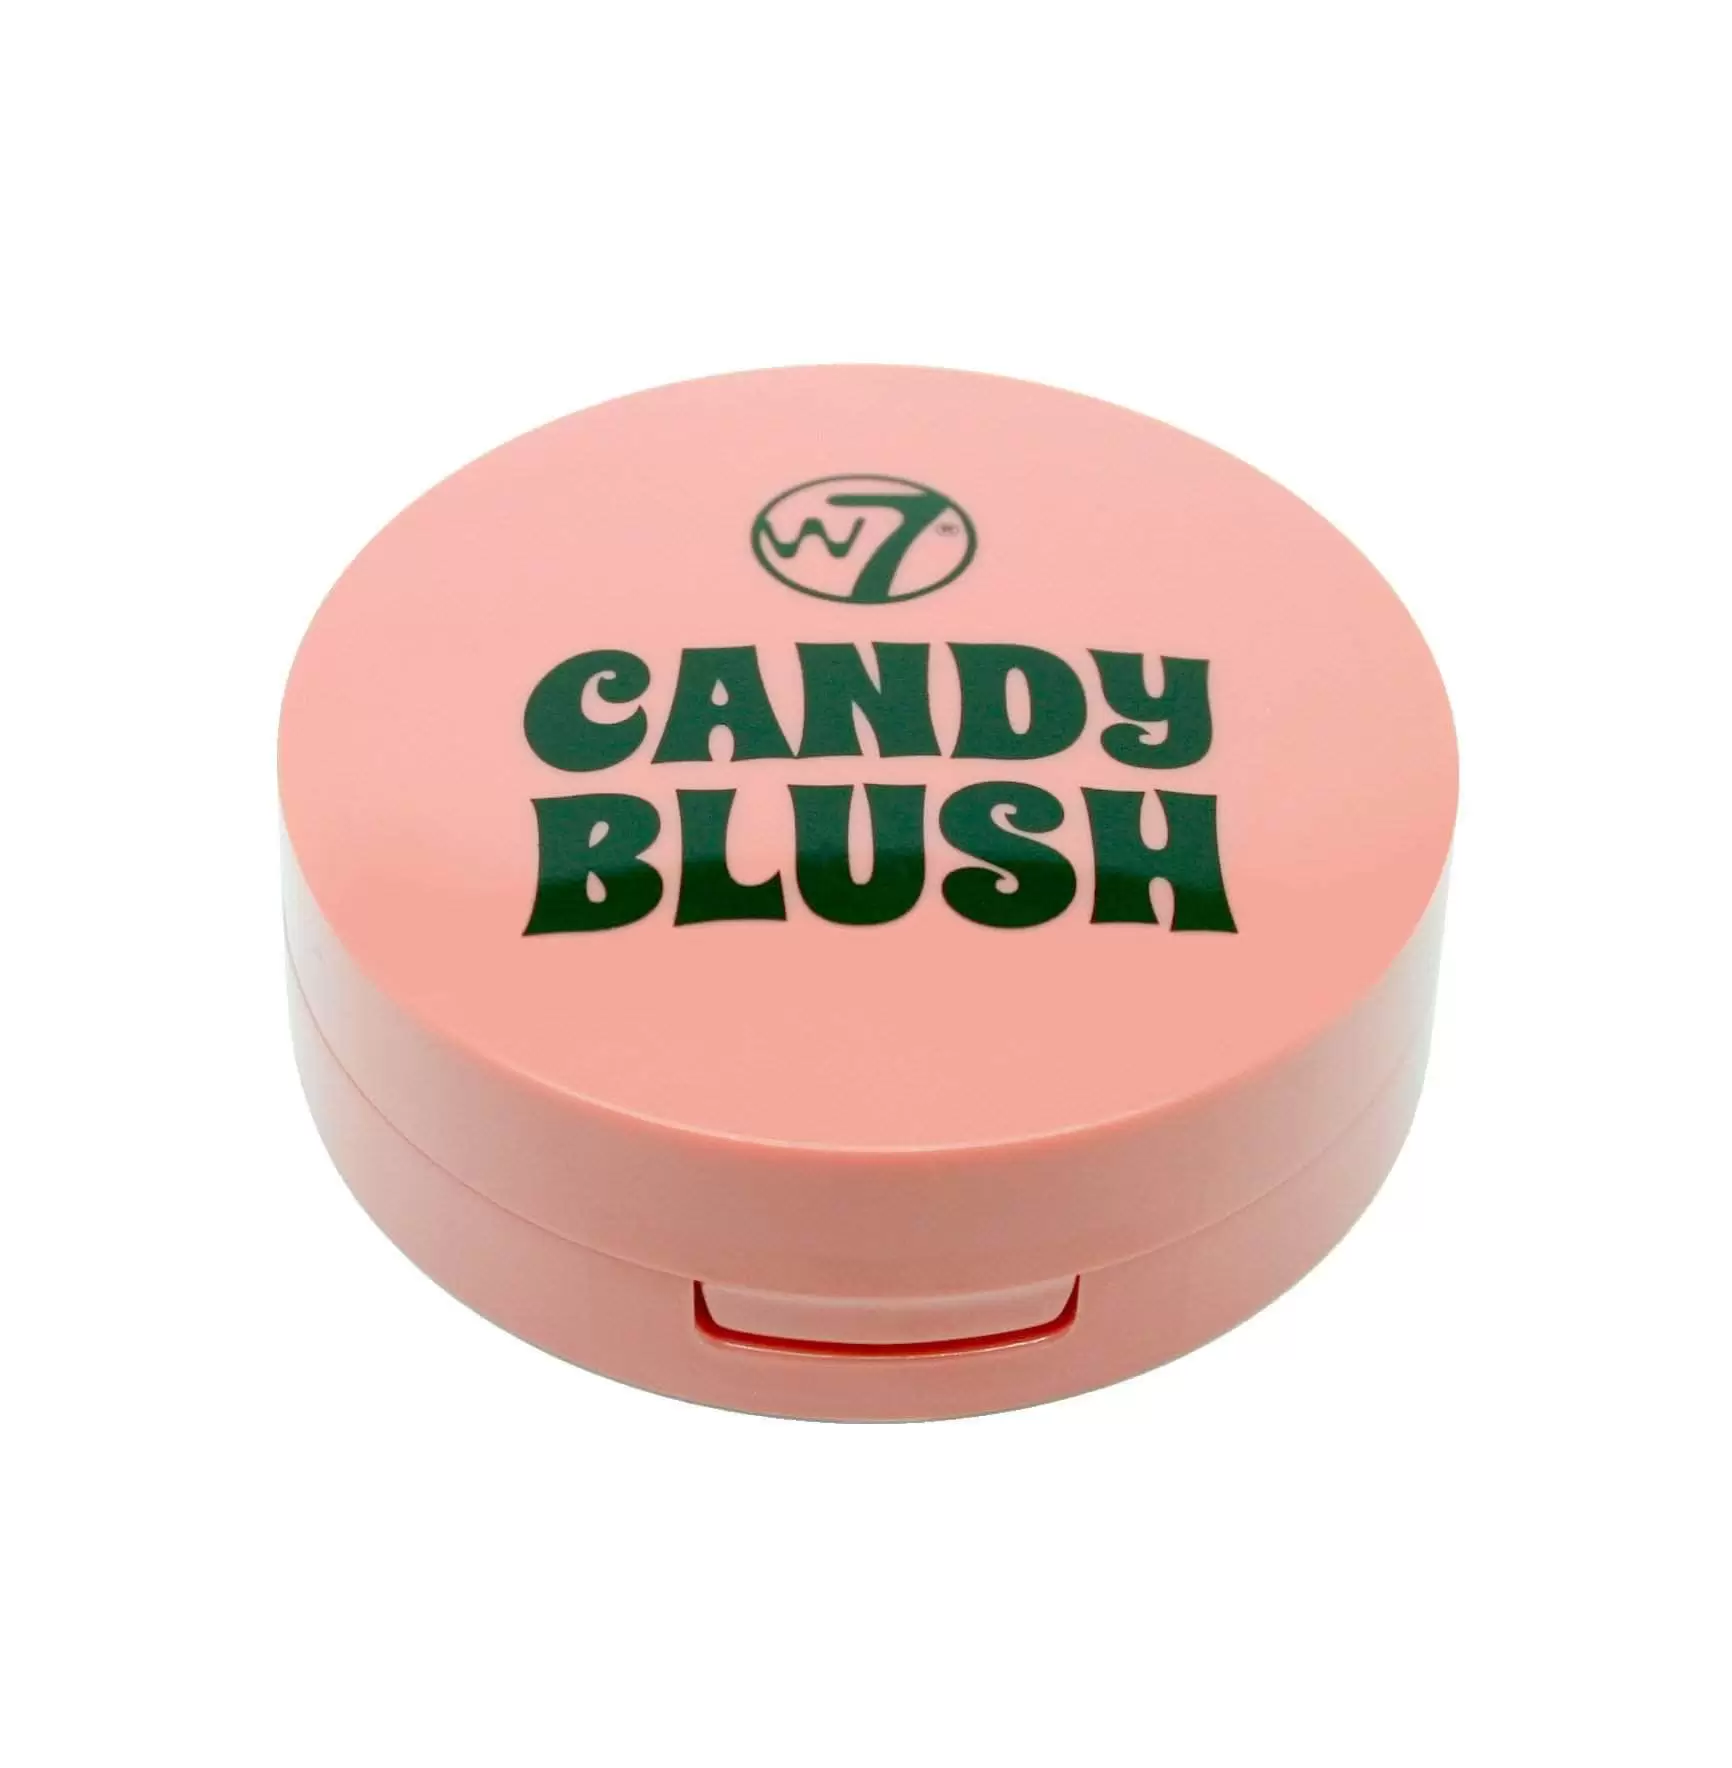 W7 Candy Blush Blusher Galactic